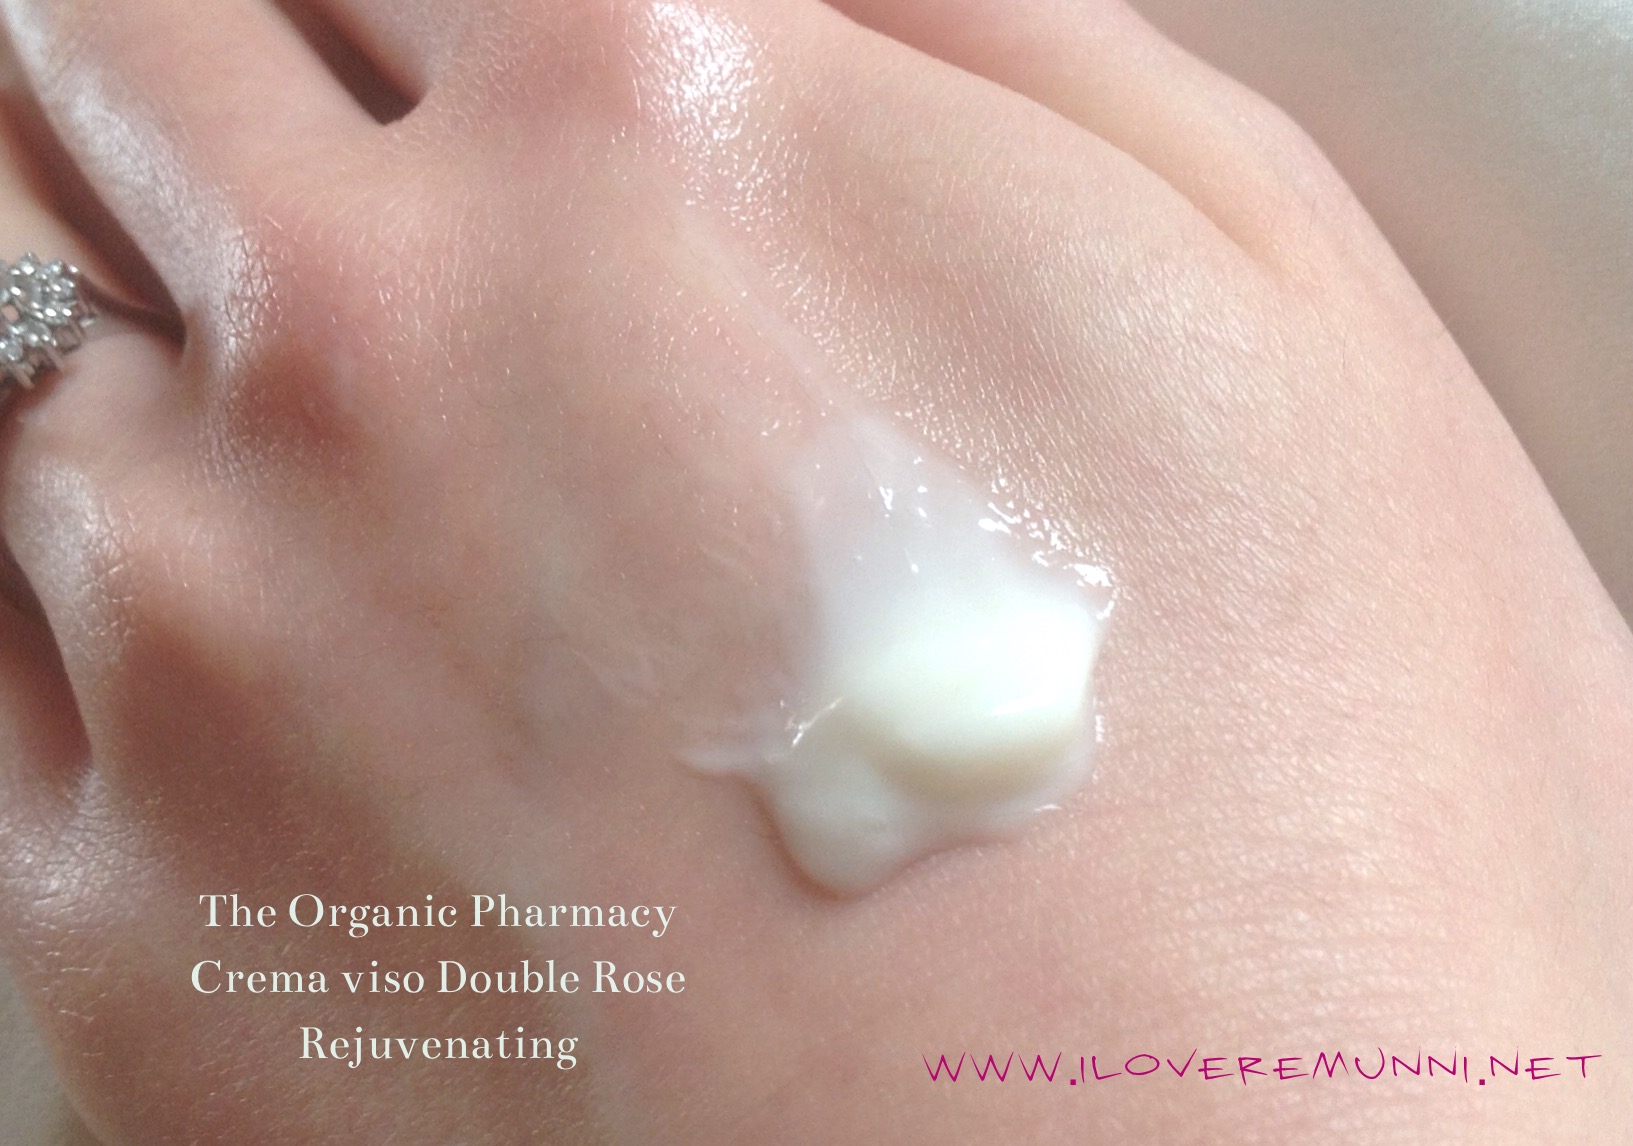 Crema-viso-the-organic-pharmacy-double-rose-rejuvenating-opinione-recensione